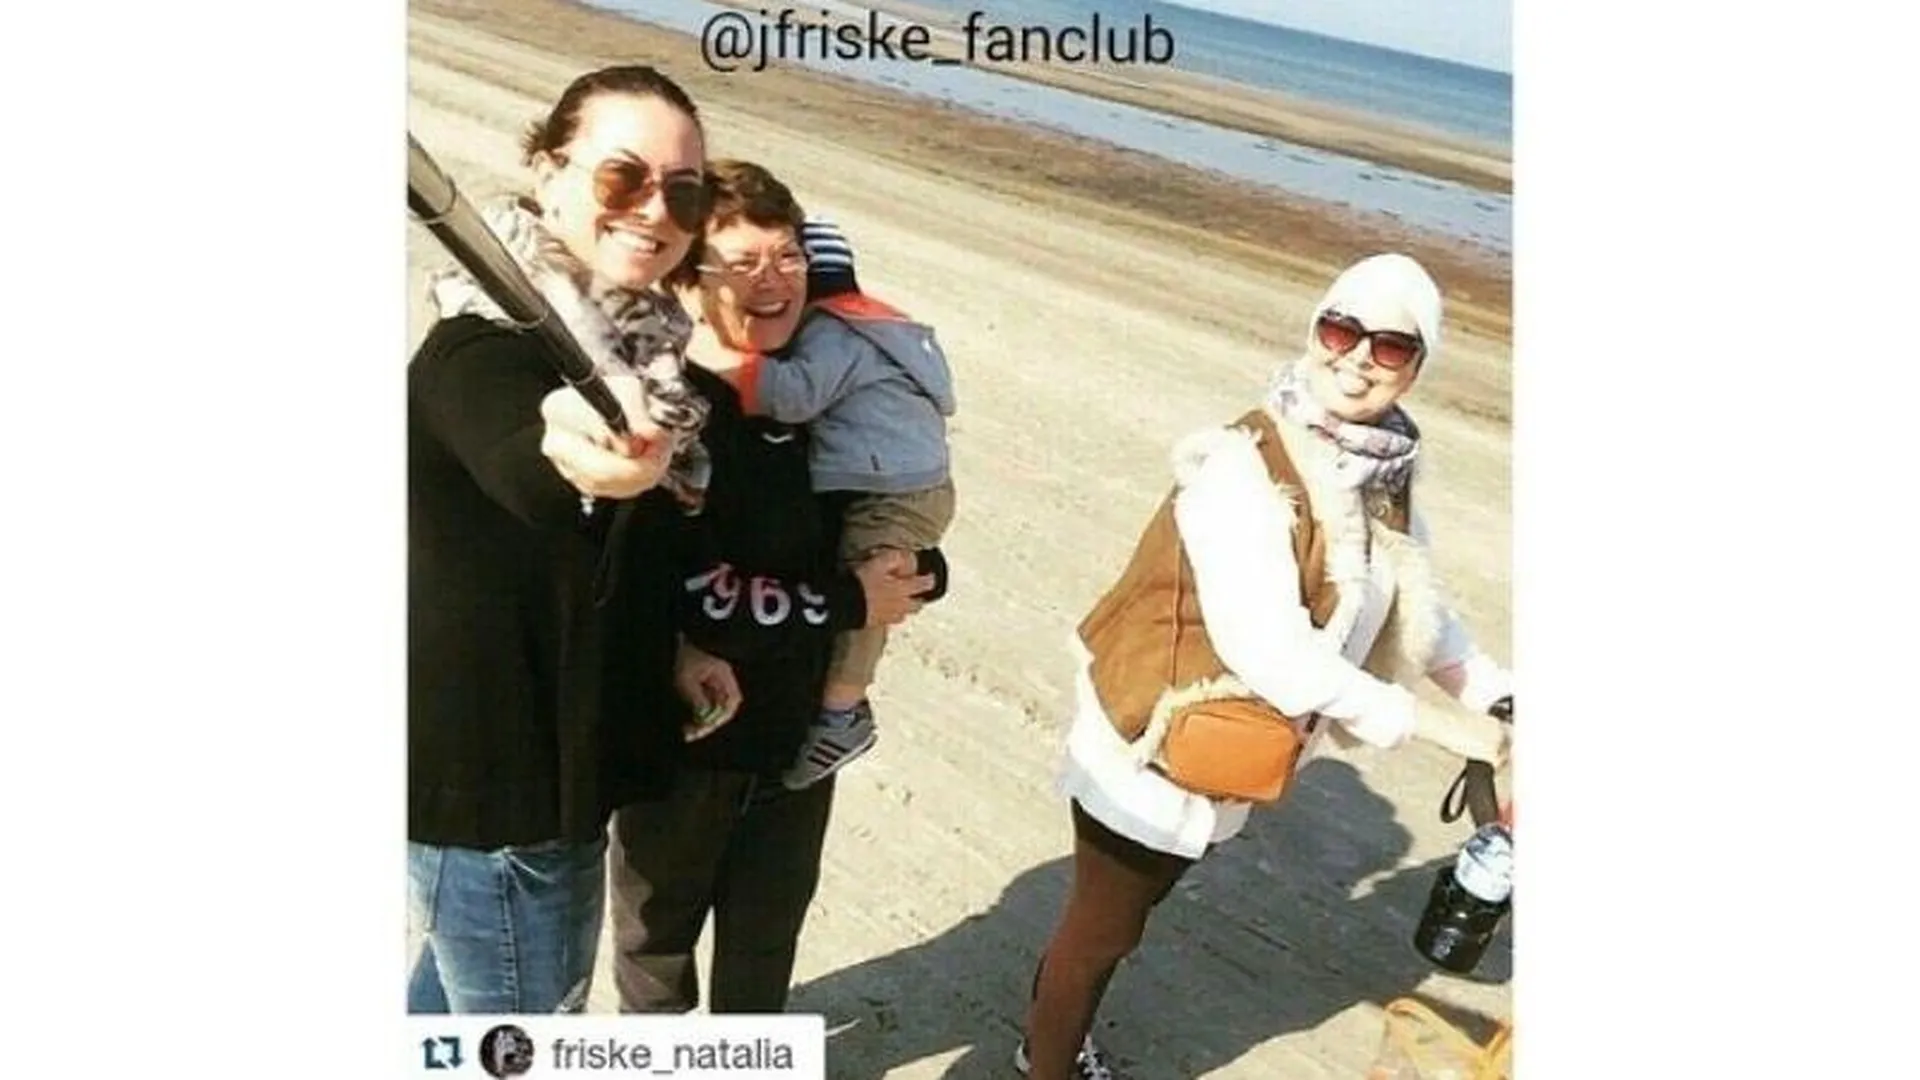 friske_natalia / Instagram